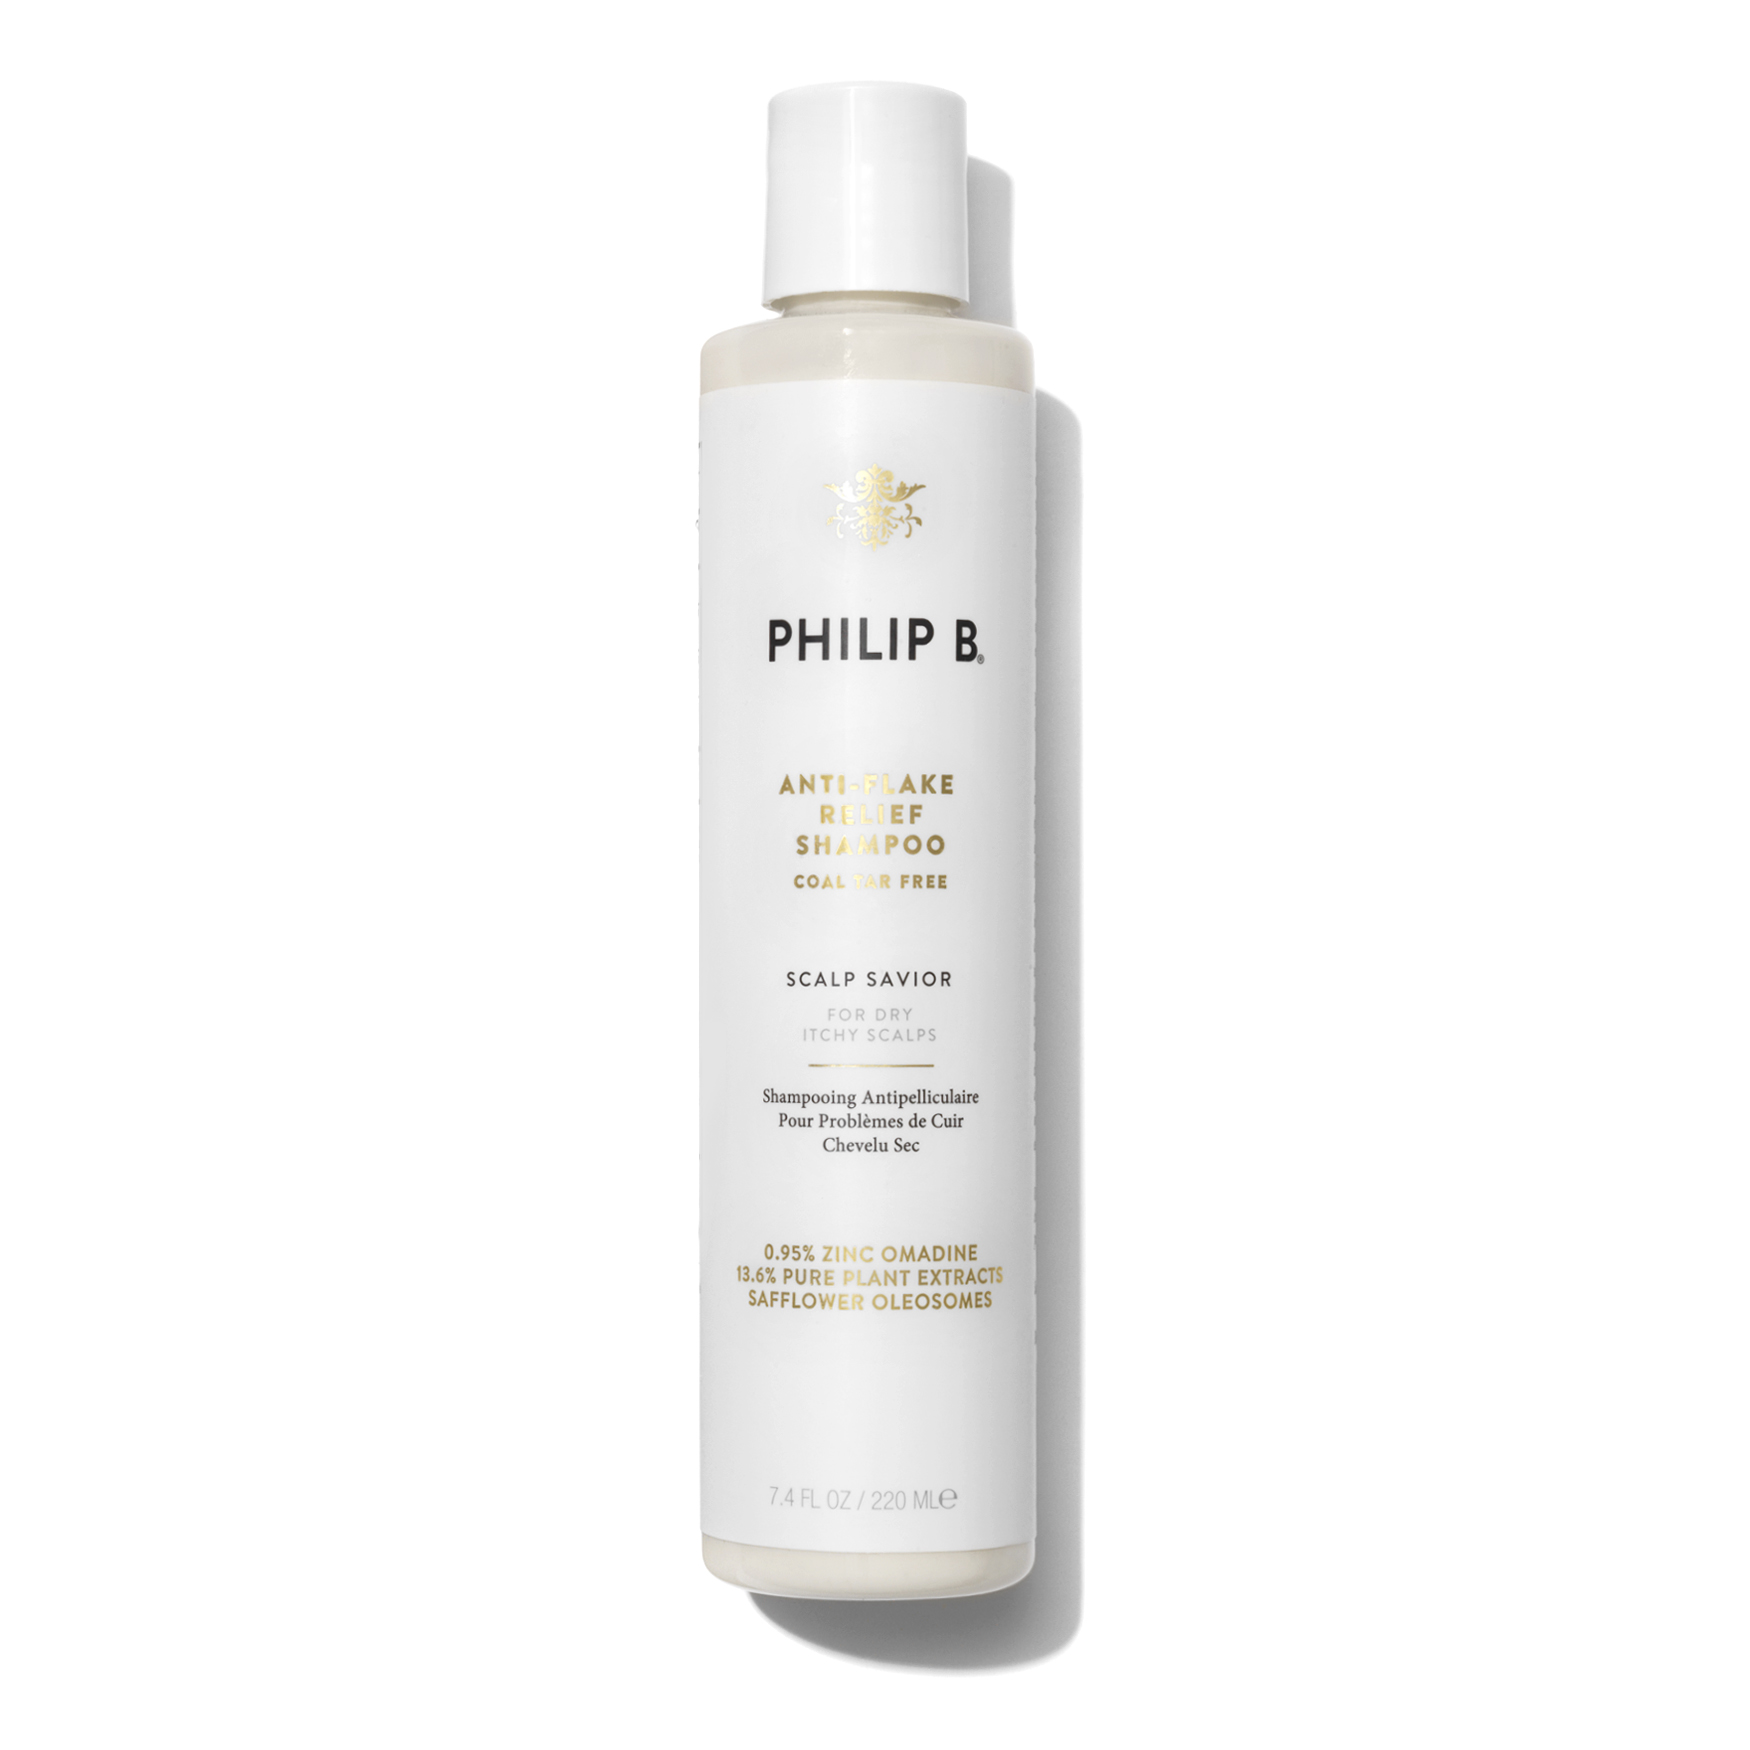 Philip B Anti-Flake Relief Shampoo | Space NK